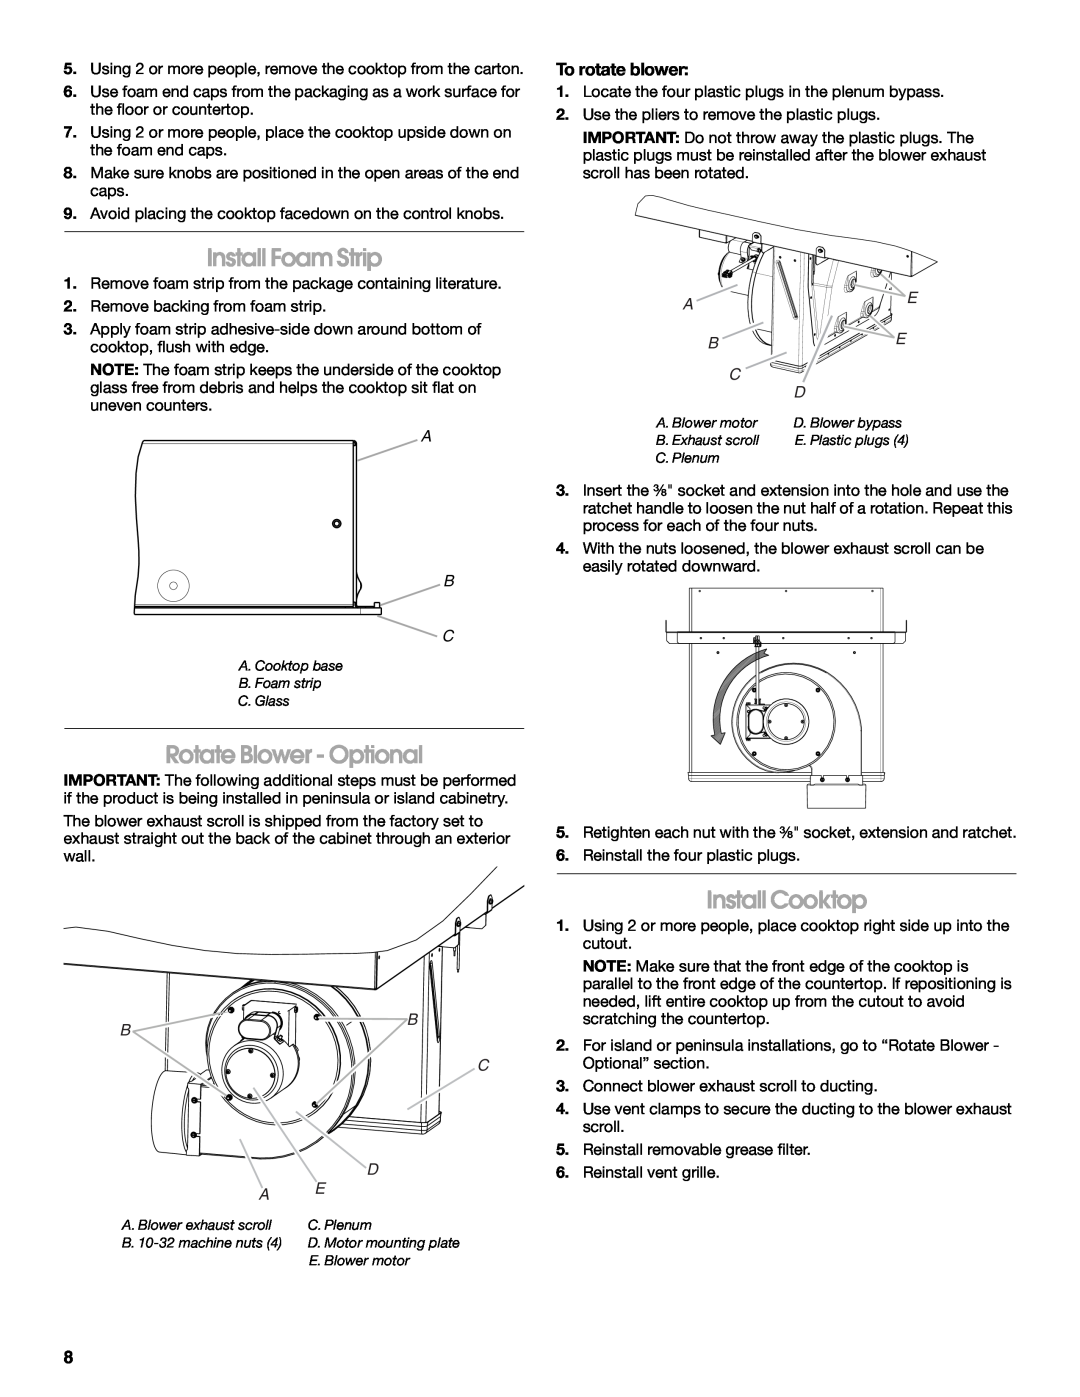 Jenn-Air W10436037B Install Foam Strip, Rotate Blower - Optional, Install Cooktop, To rotate blower 